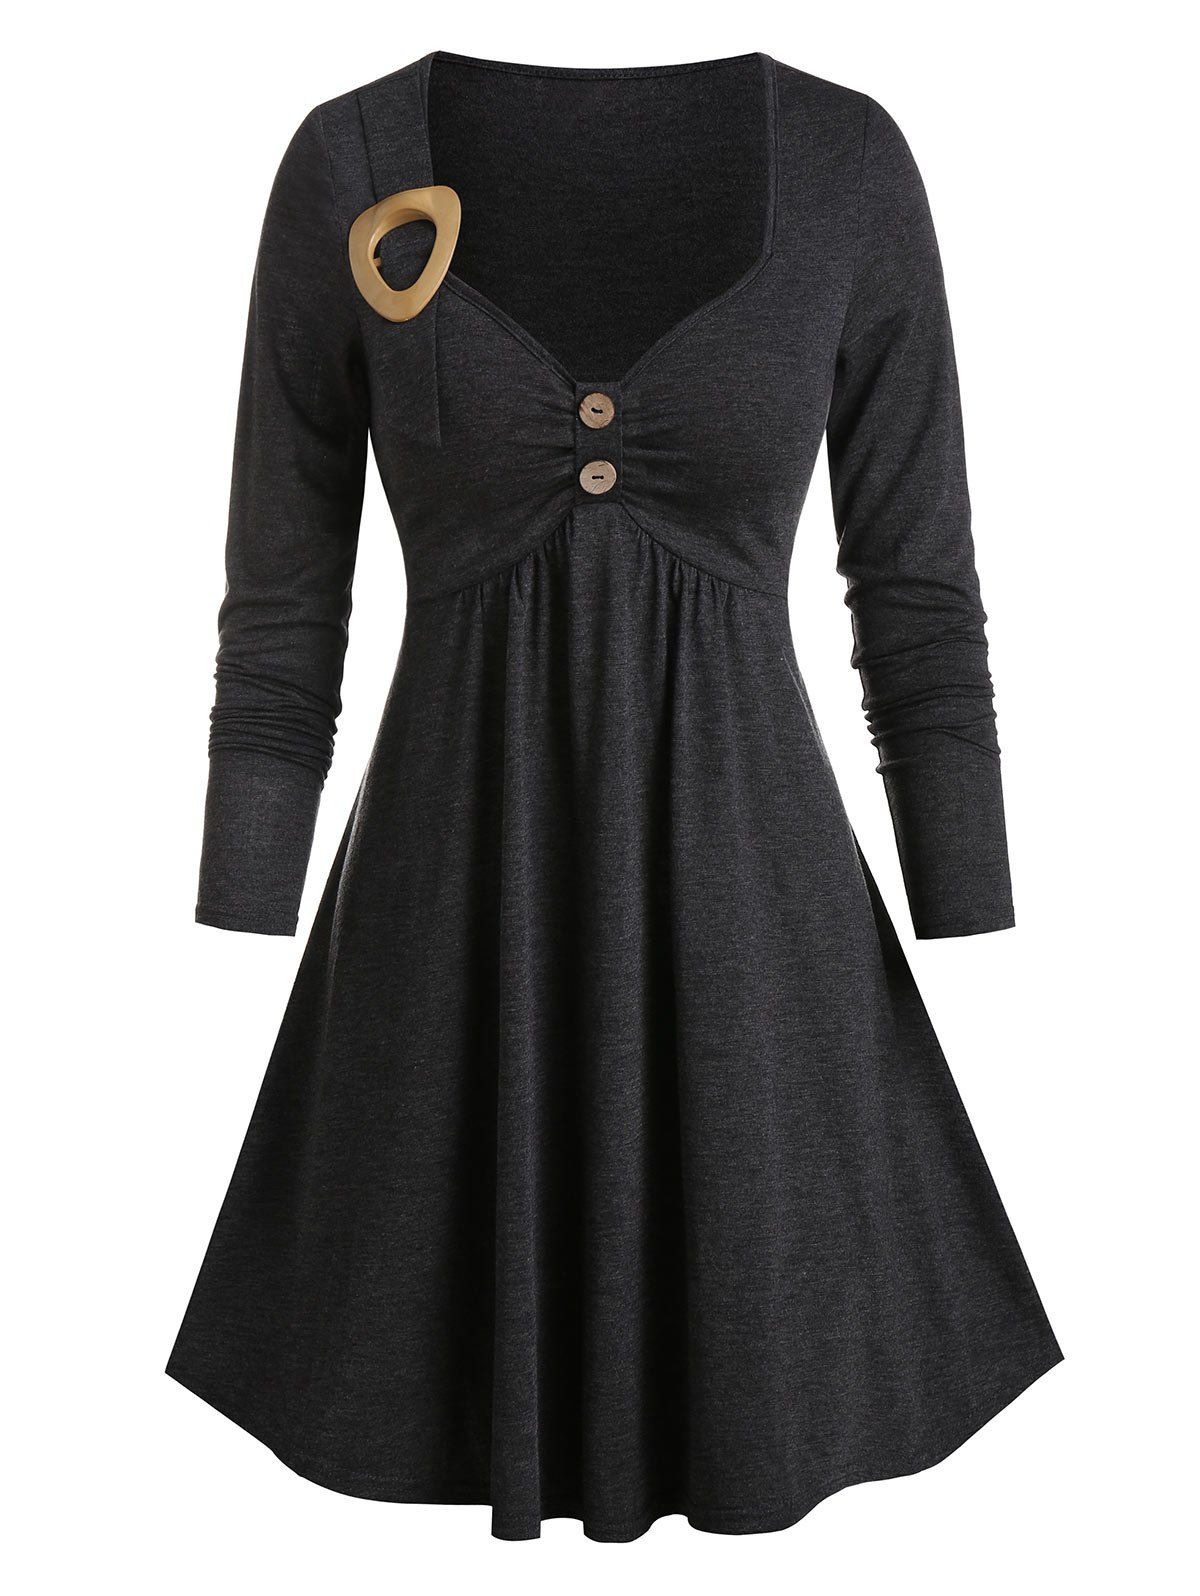 Long Sleeve Buckle Detail Heathered Dress - DARK GRAY M